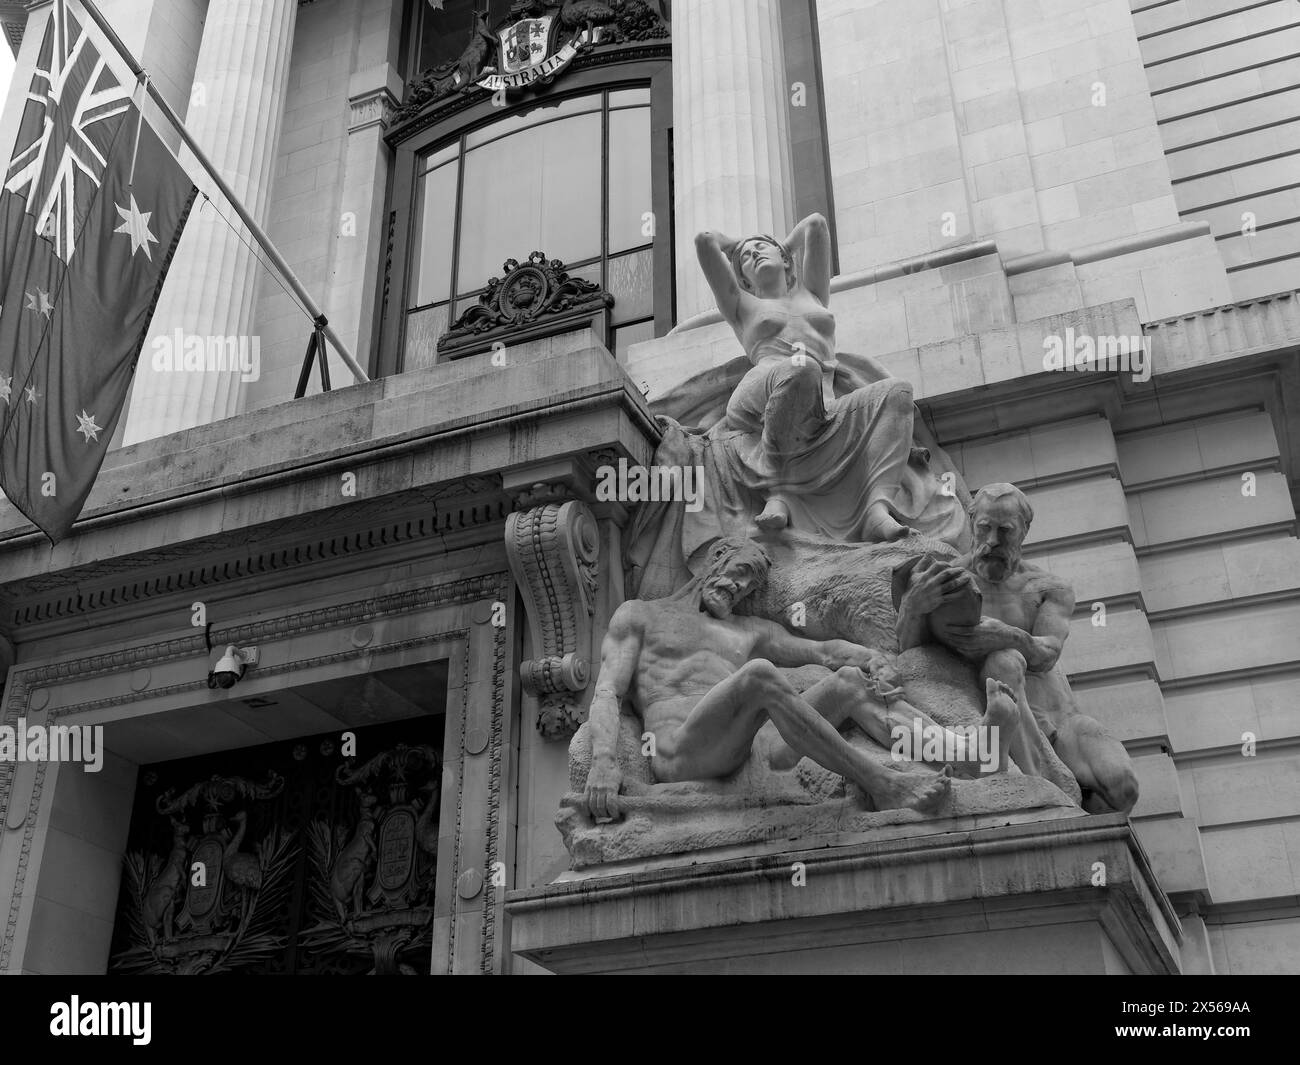 Awakening of Australia, Sculpture, Australia House, The Strand, London, England, UK. GB. Stock Photo